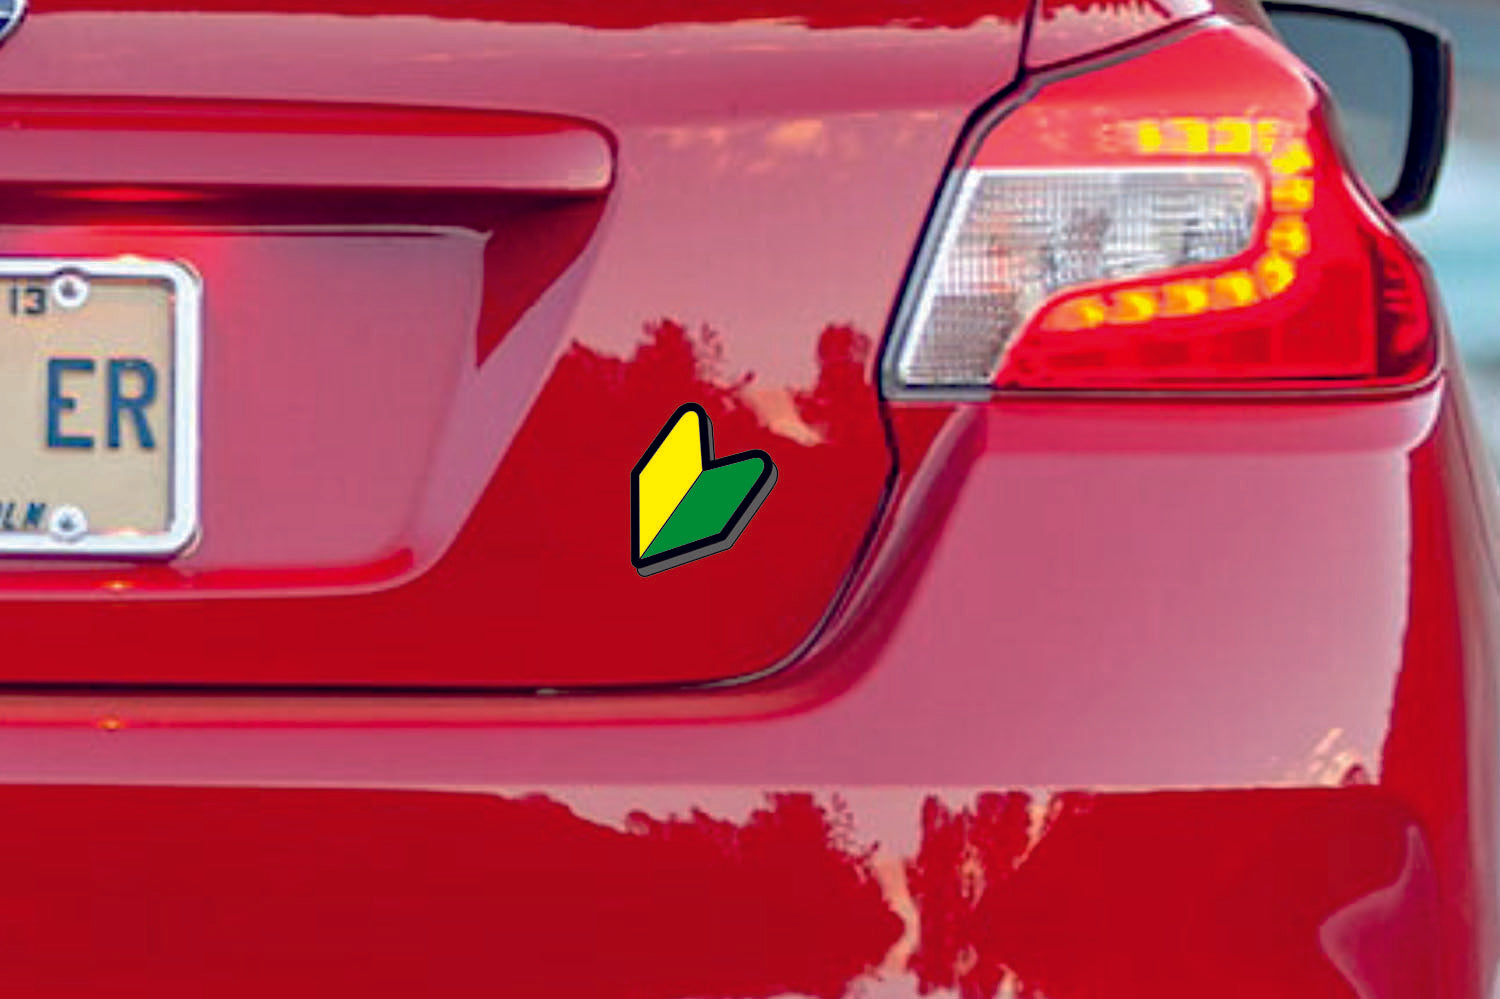 Infiniti tailgate trunk rear emblem with JDM logo